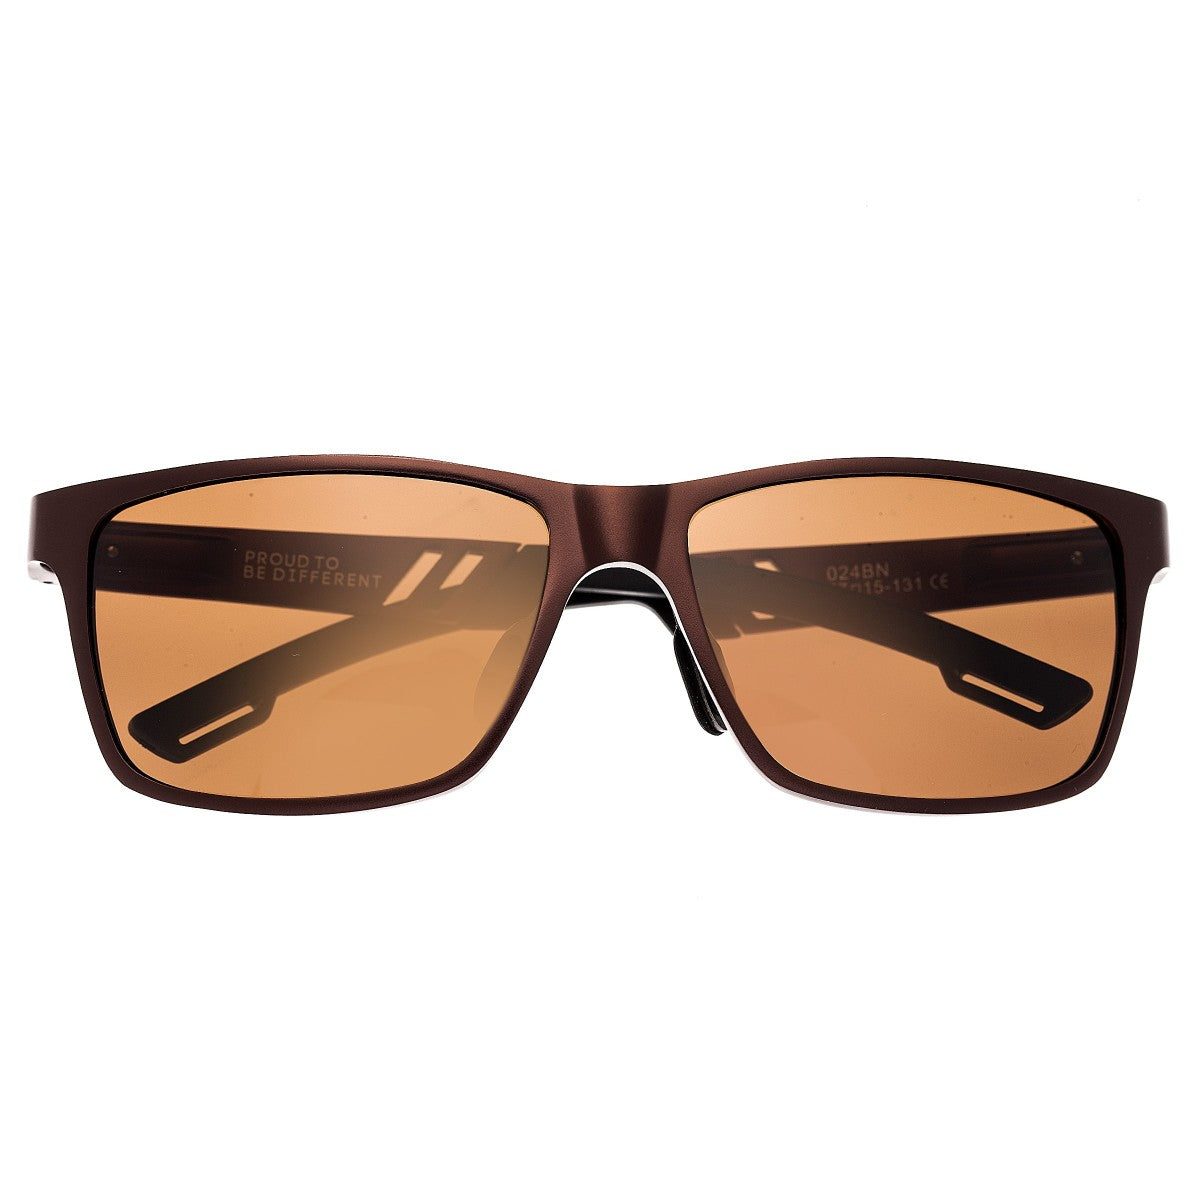 Breed Pyxis Titanium Polarized Sunglasses - Brown/Brown - BSG024BN